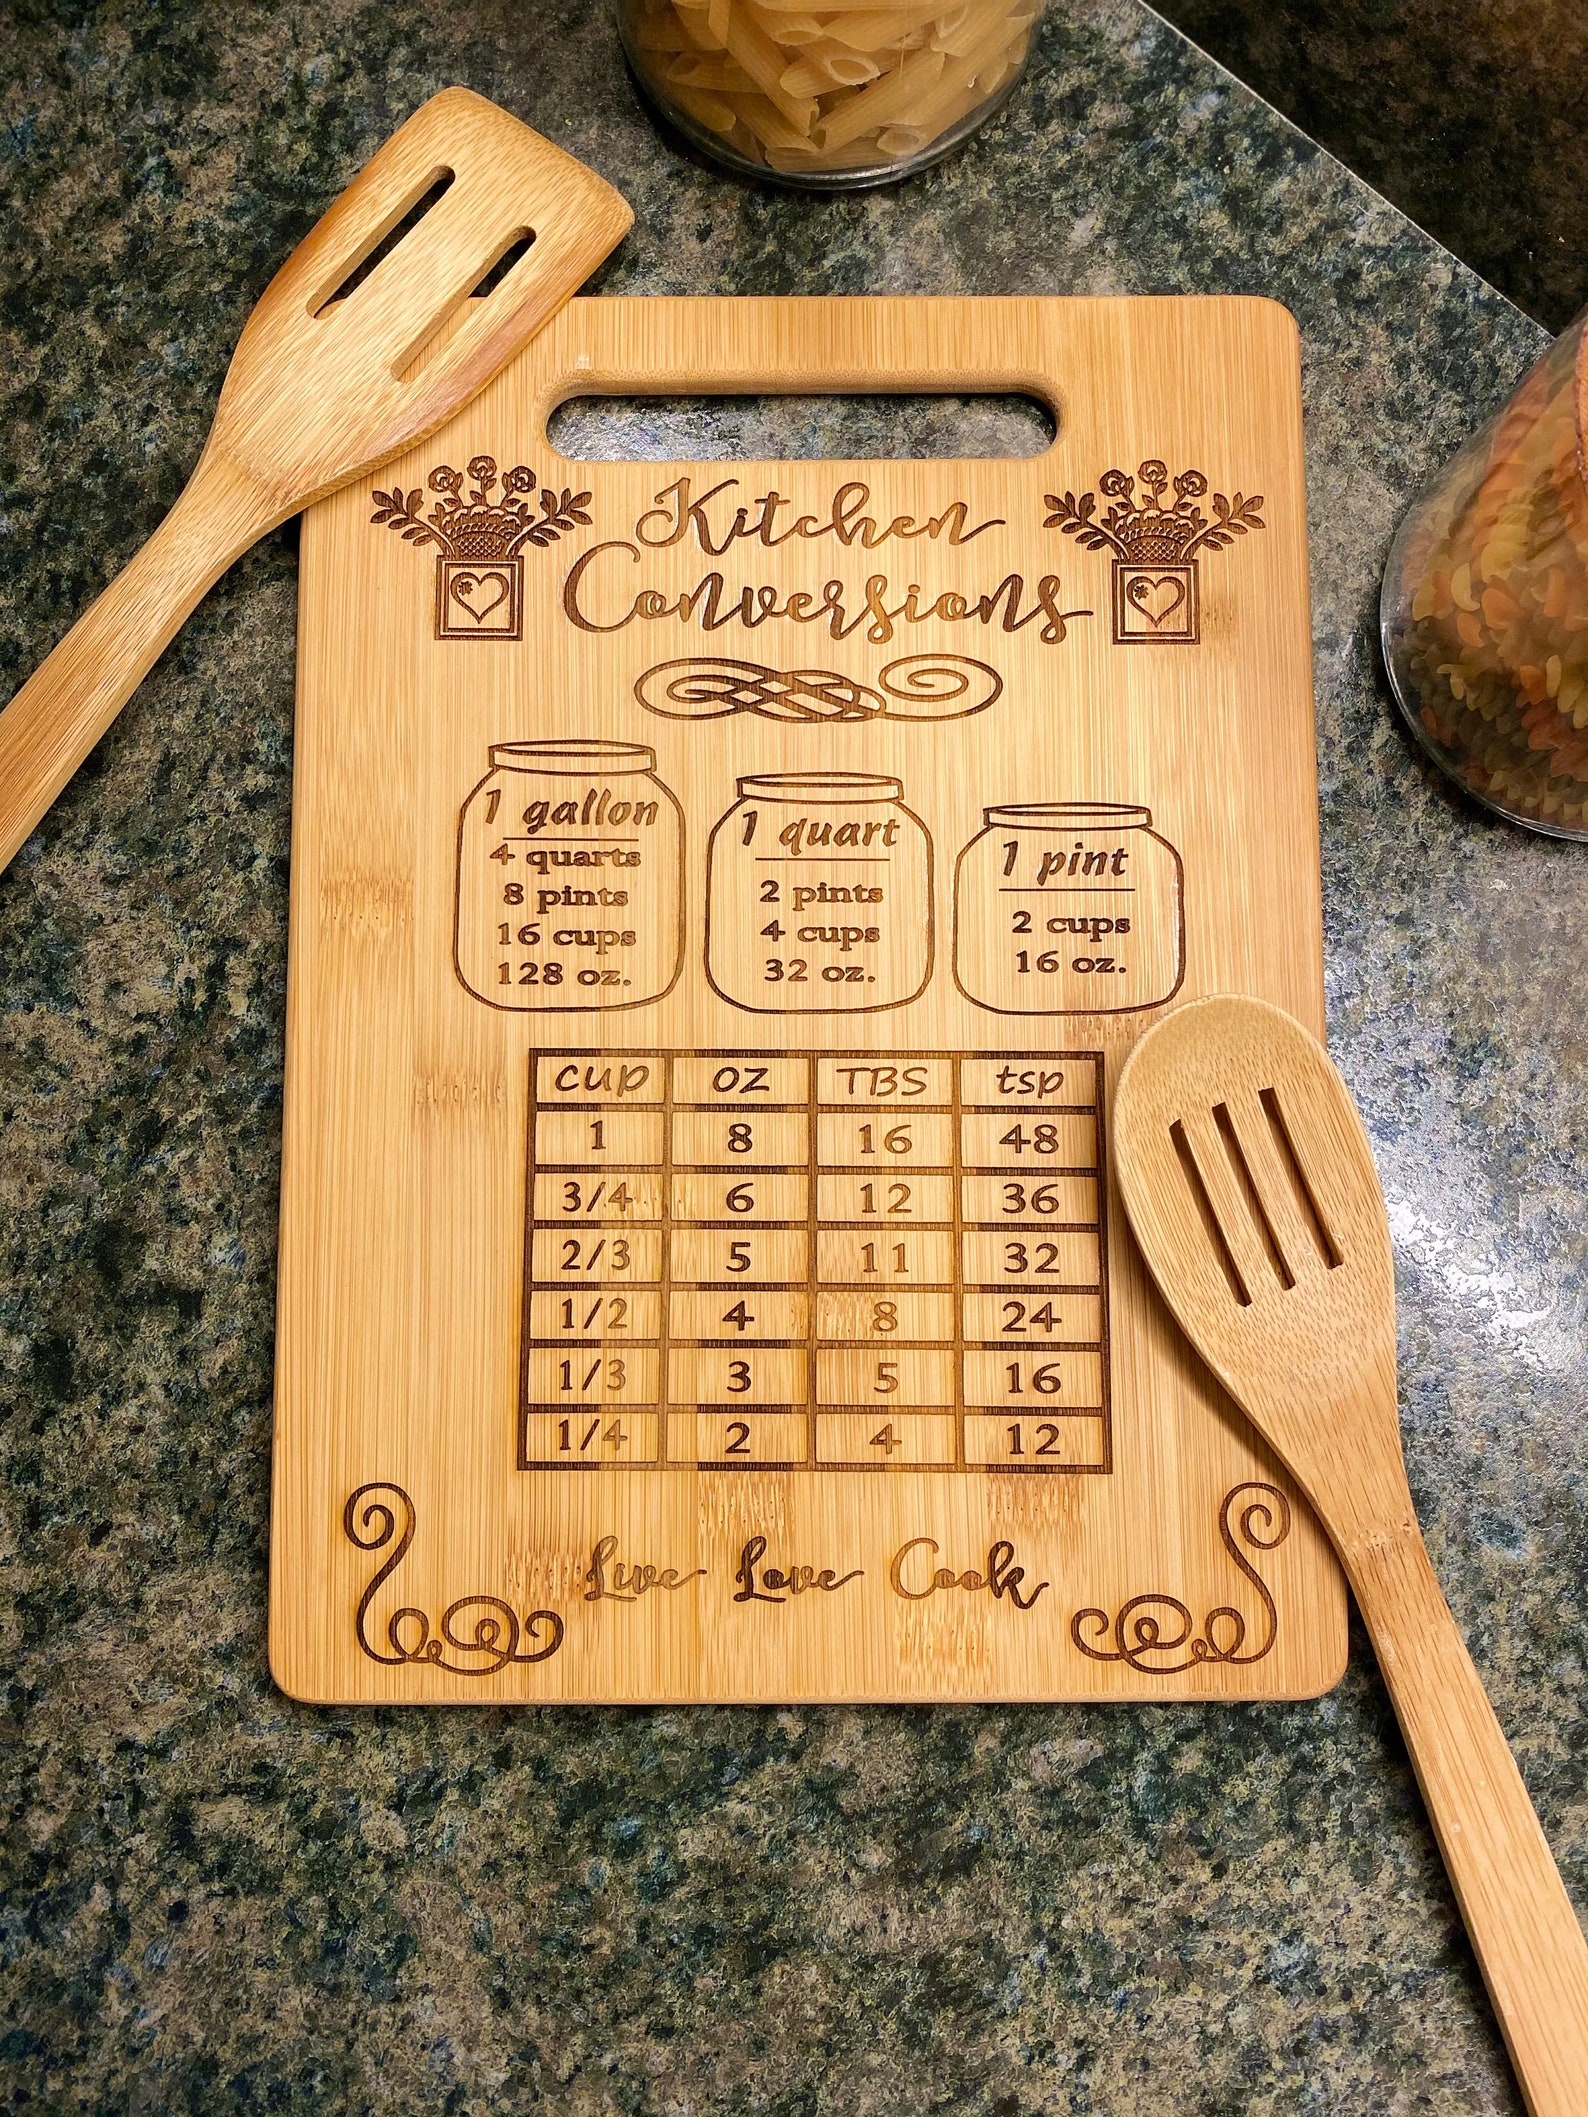 bamboo-cutting-board-kitchen-conversion-chart-etsy-canada